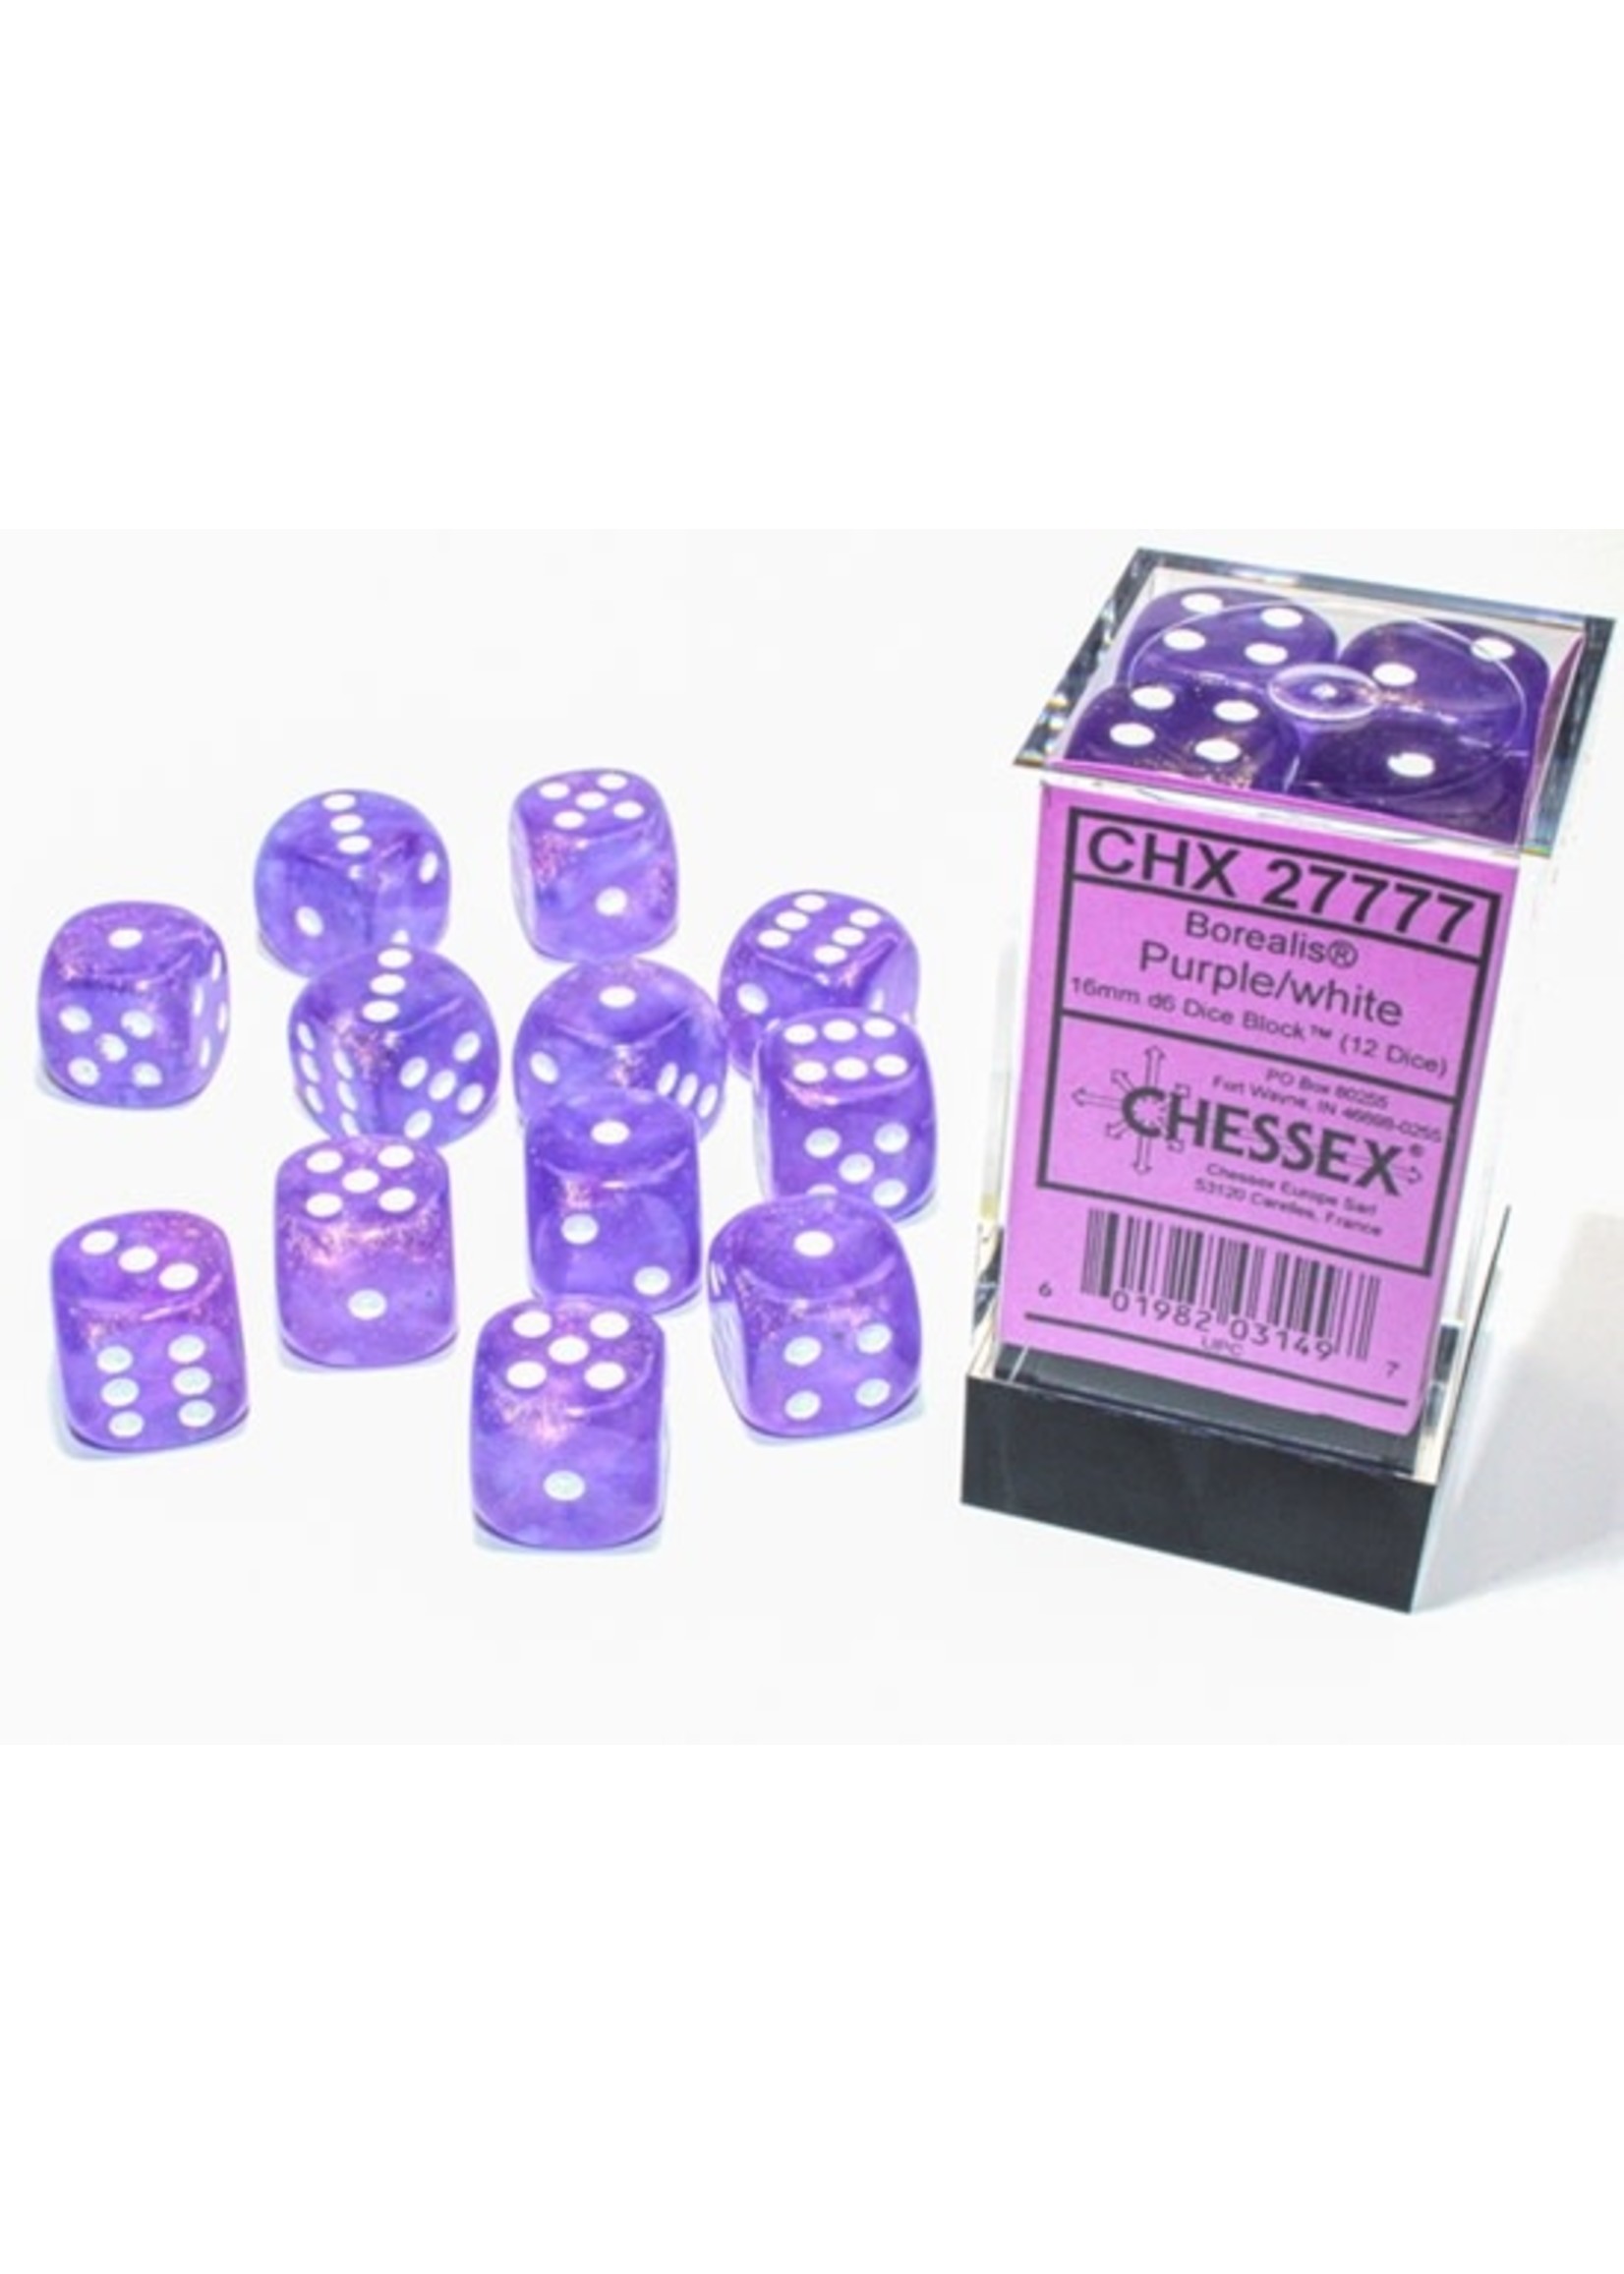 Chessex d6 Cube 16mm Borealis Luminary Purple w/ White (12)